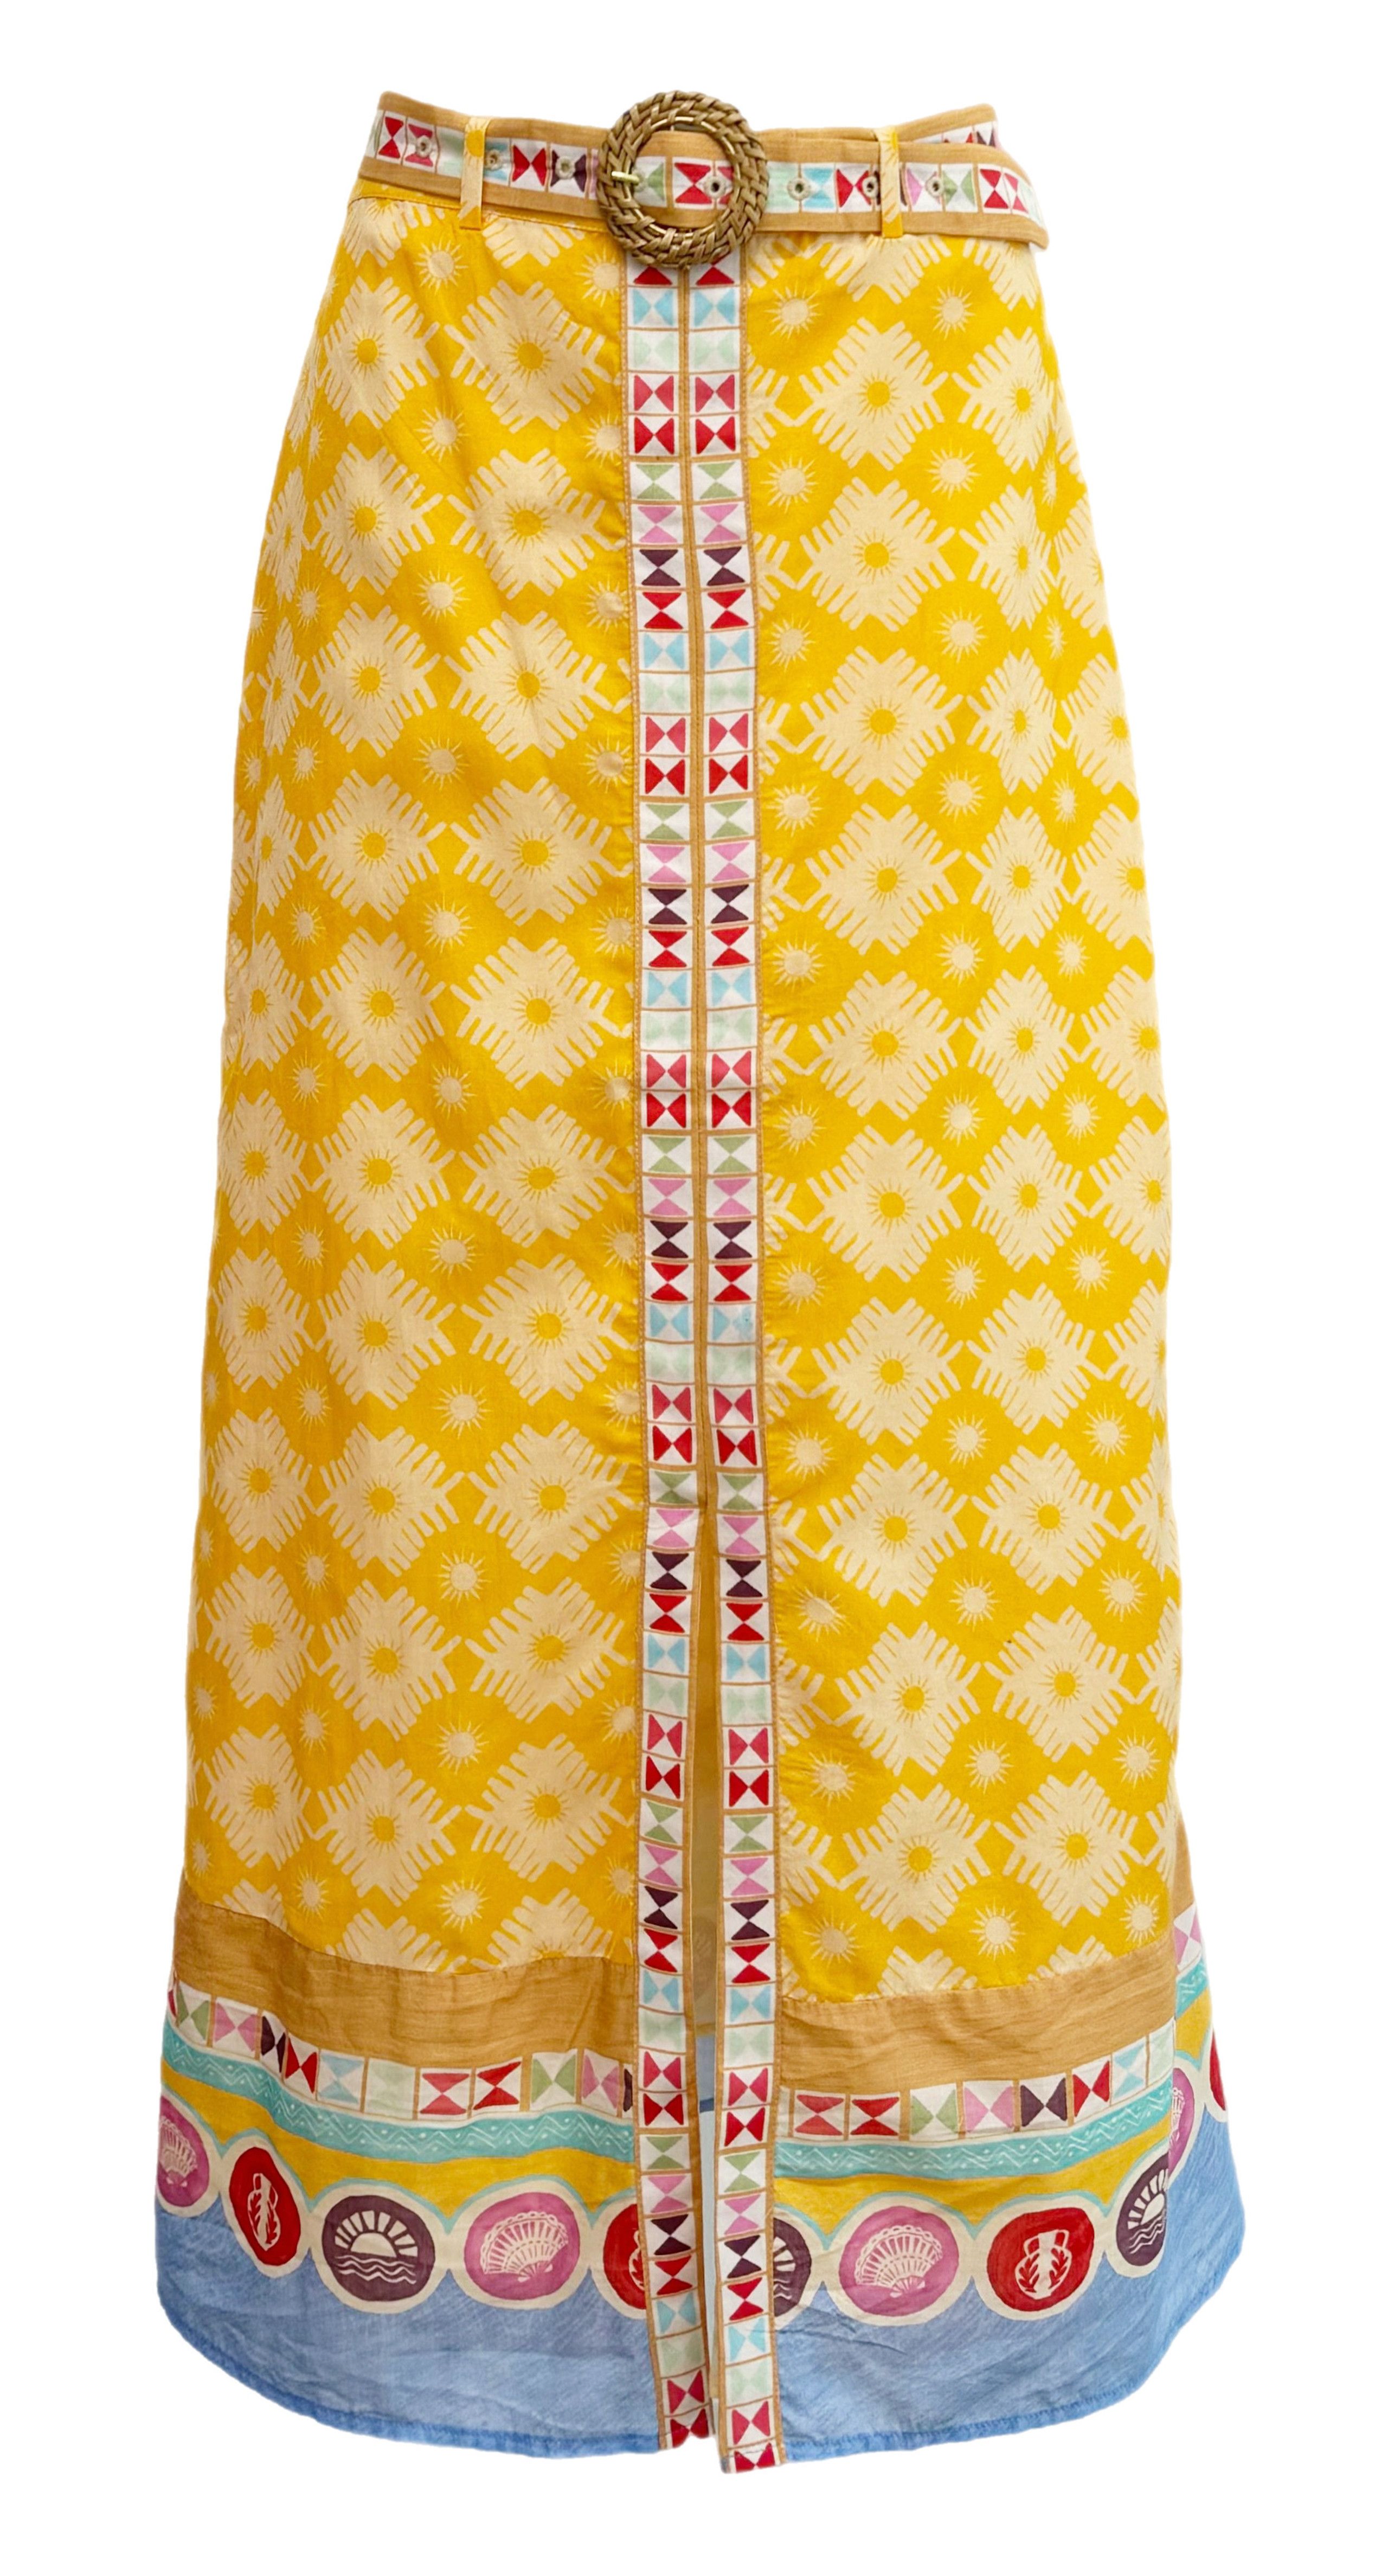 Anna Cate Portia Skirt, Sunnyside | Monkee's of Mount Pleasant